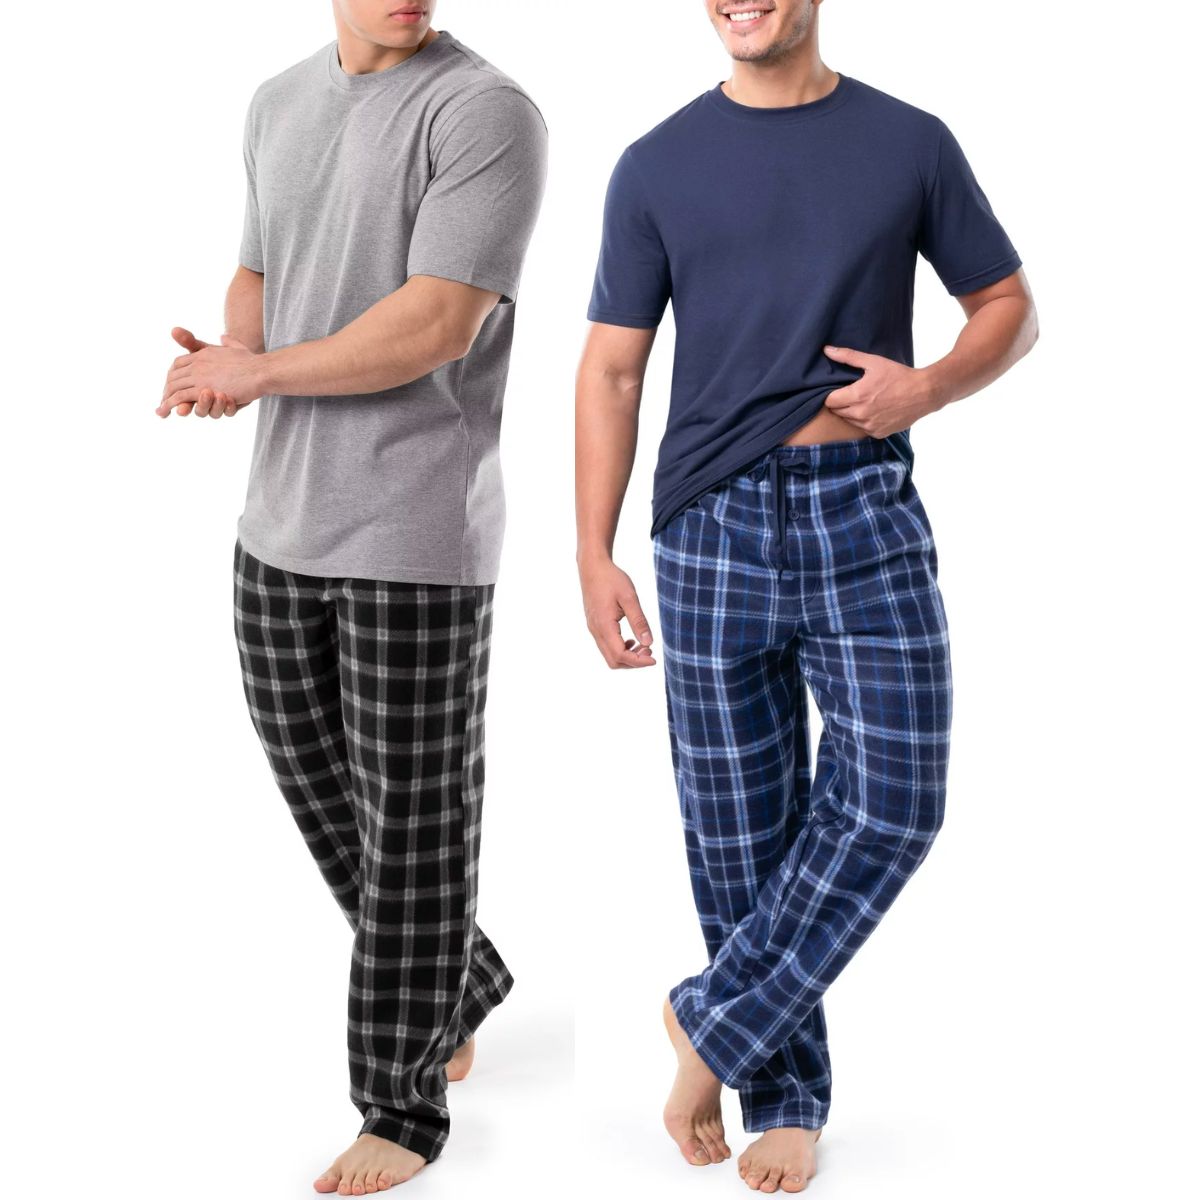 2 models models wearing mens fruit of the loom pajama sets stock image